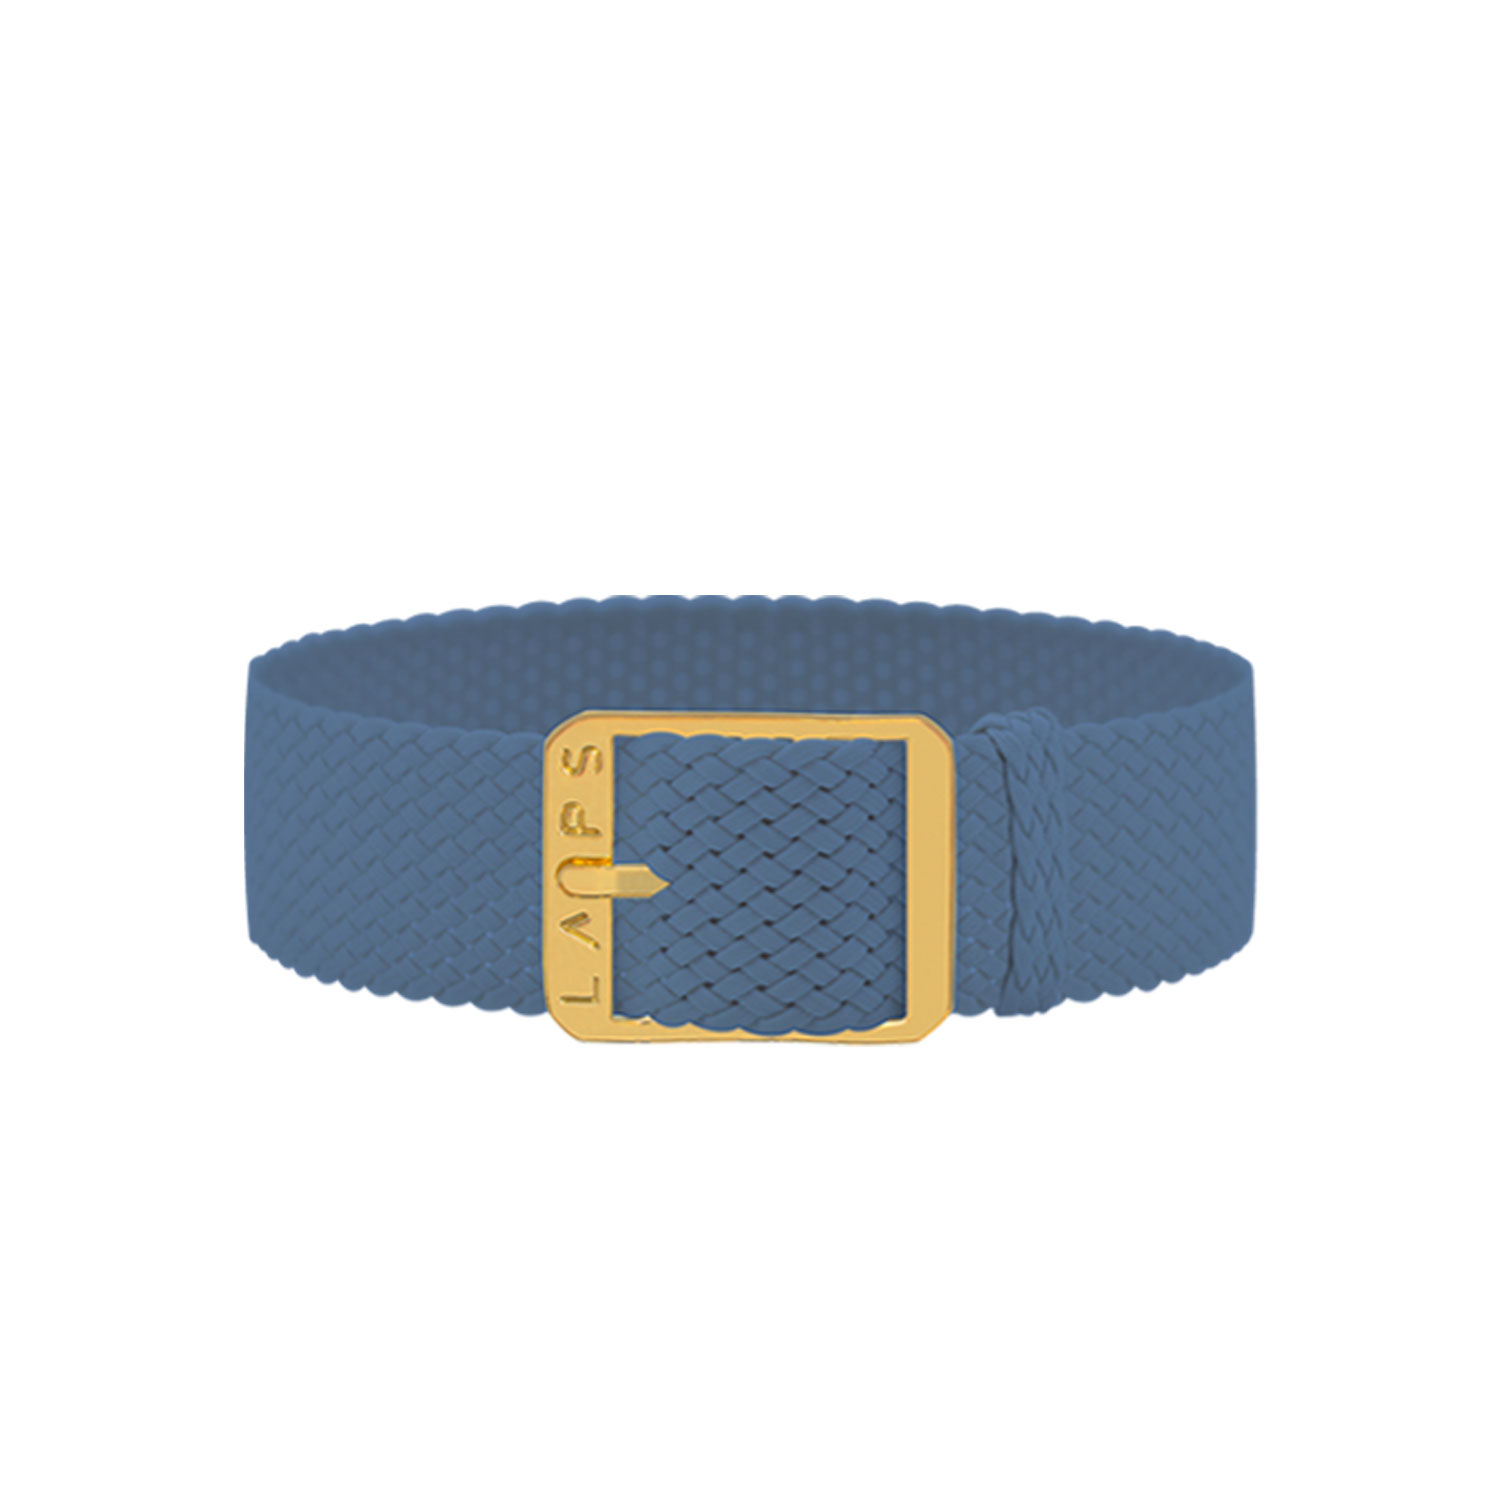 18mm Perlon Parisian Blue Strap - Gold Buckle